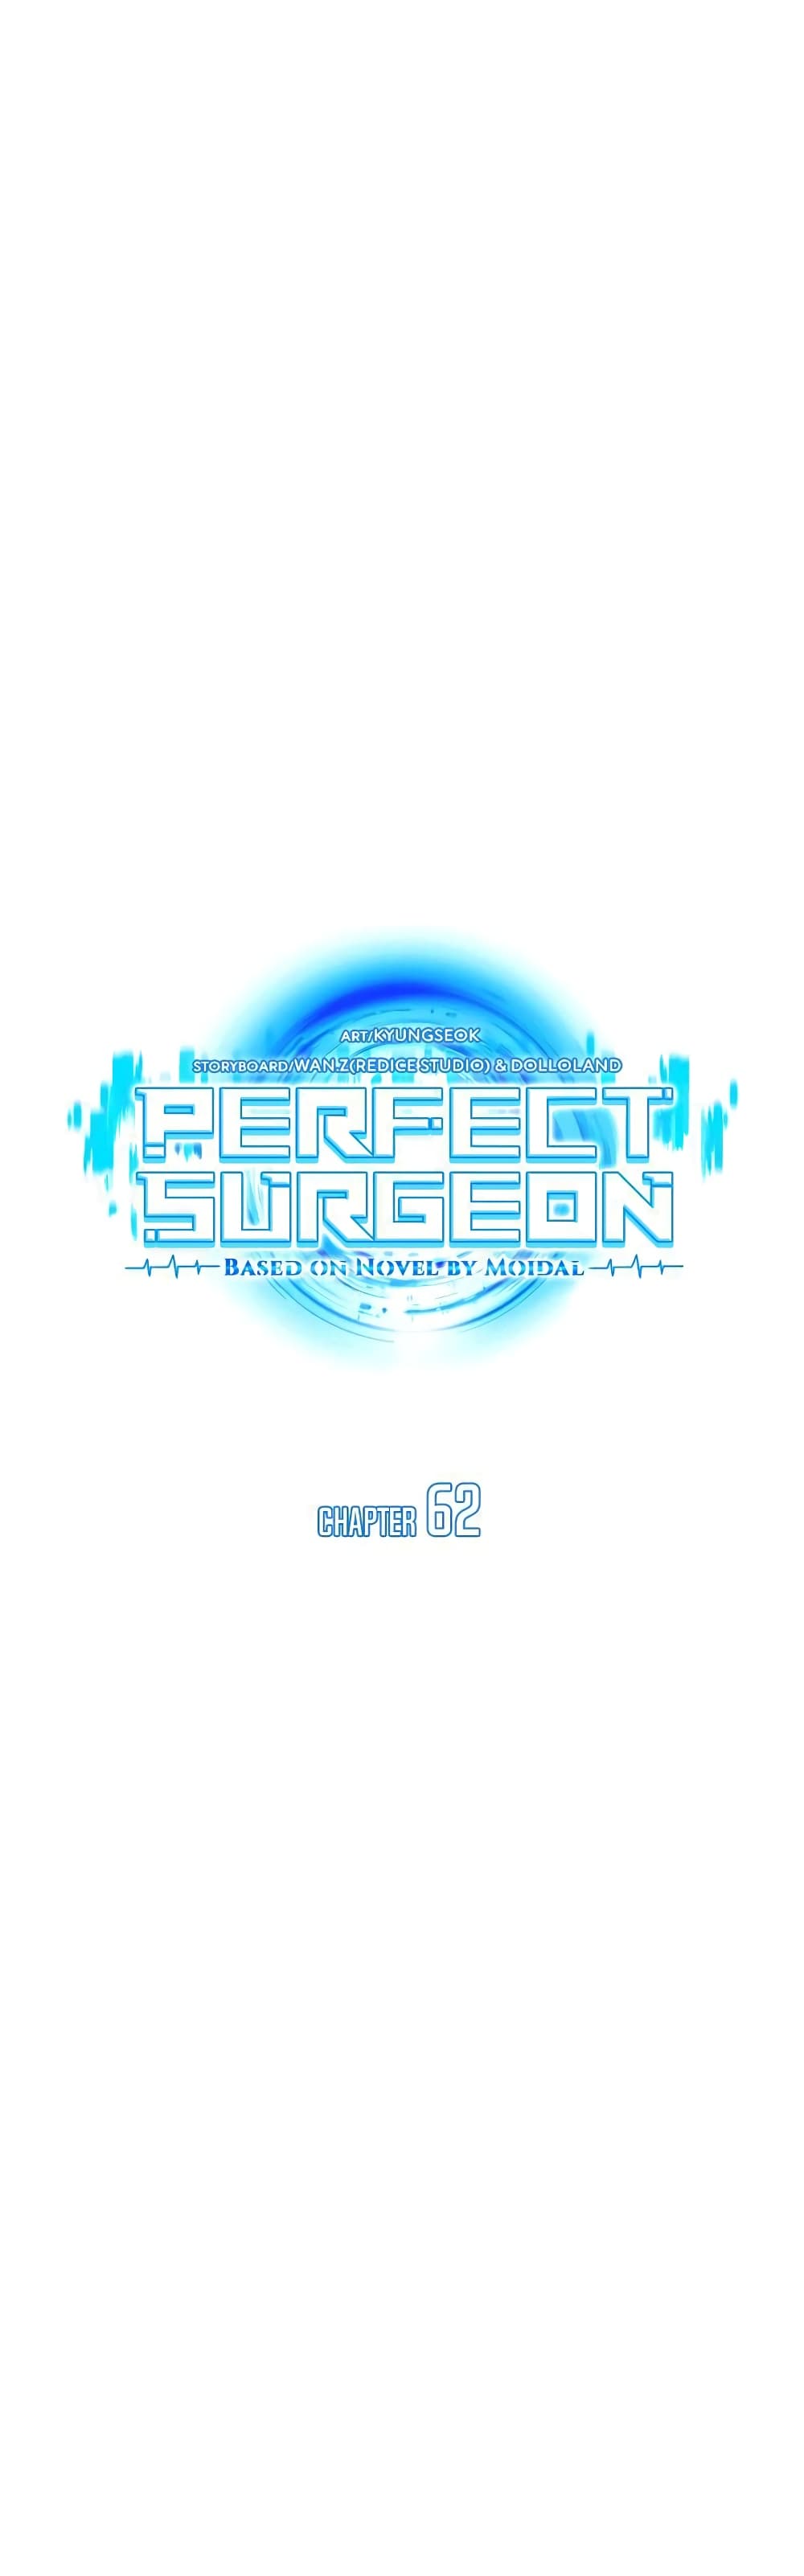 Perfect Surgeon 62-62